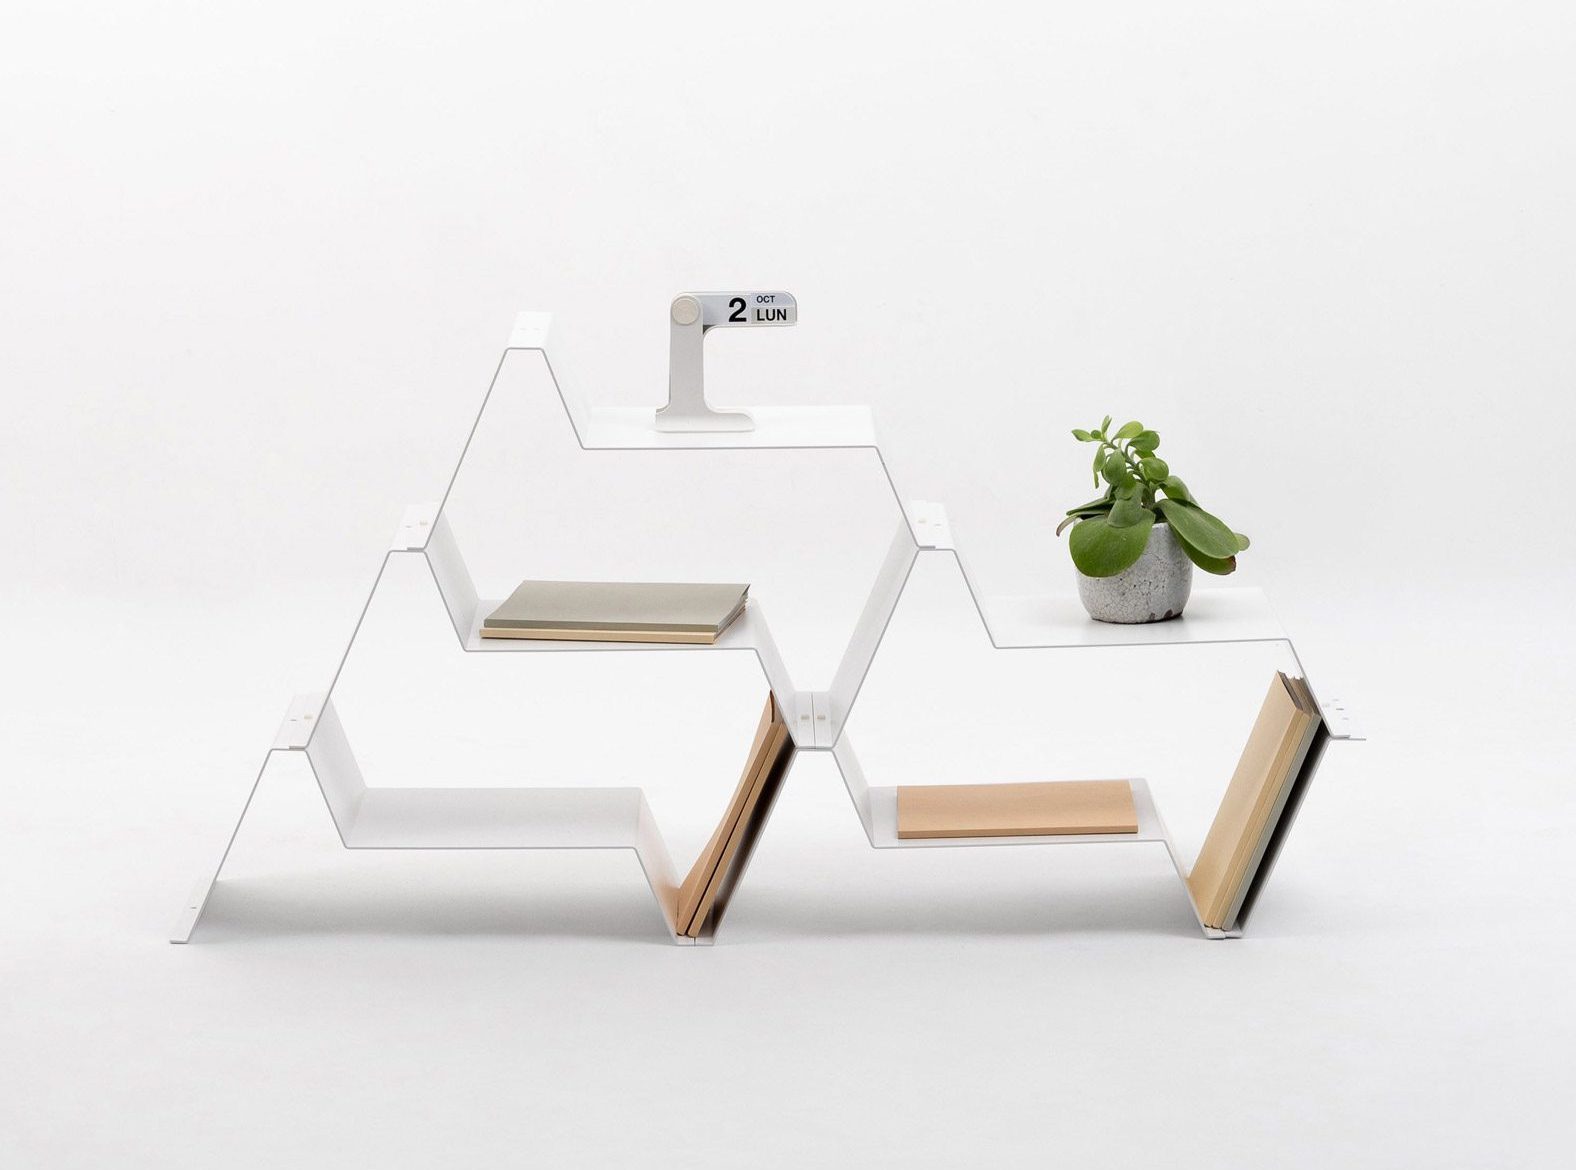 Three Frequence modular shelf elements arranged as a display